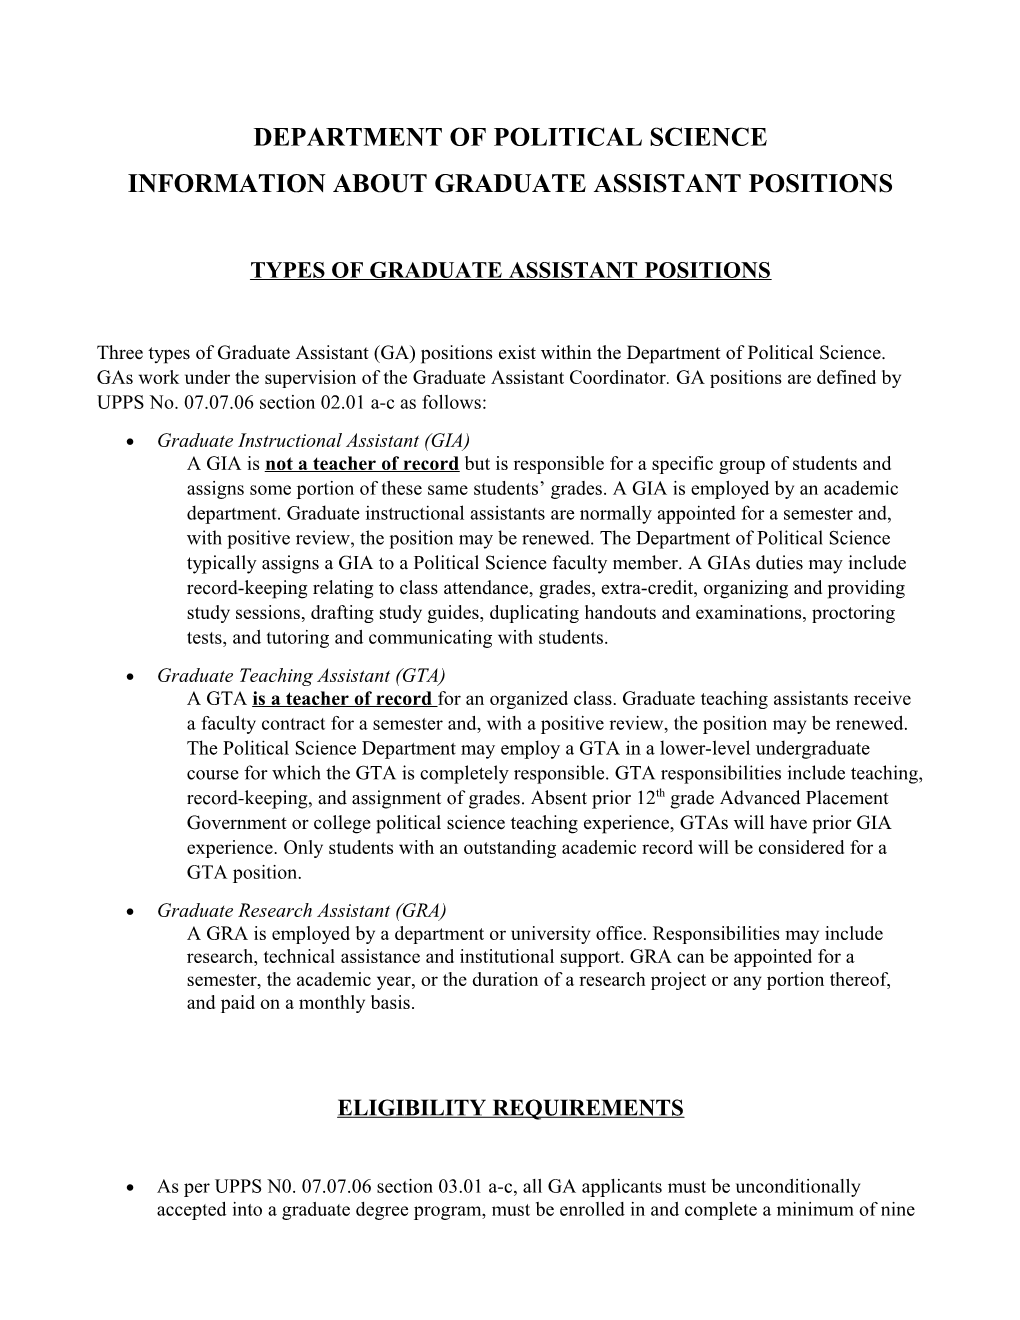 Information About Graduate Assistant Positions